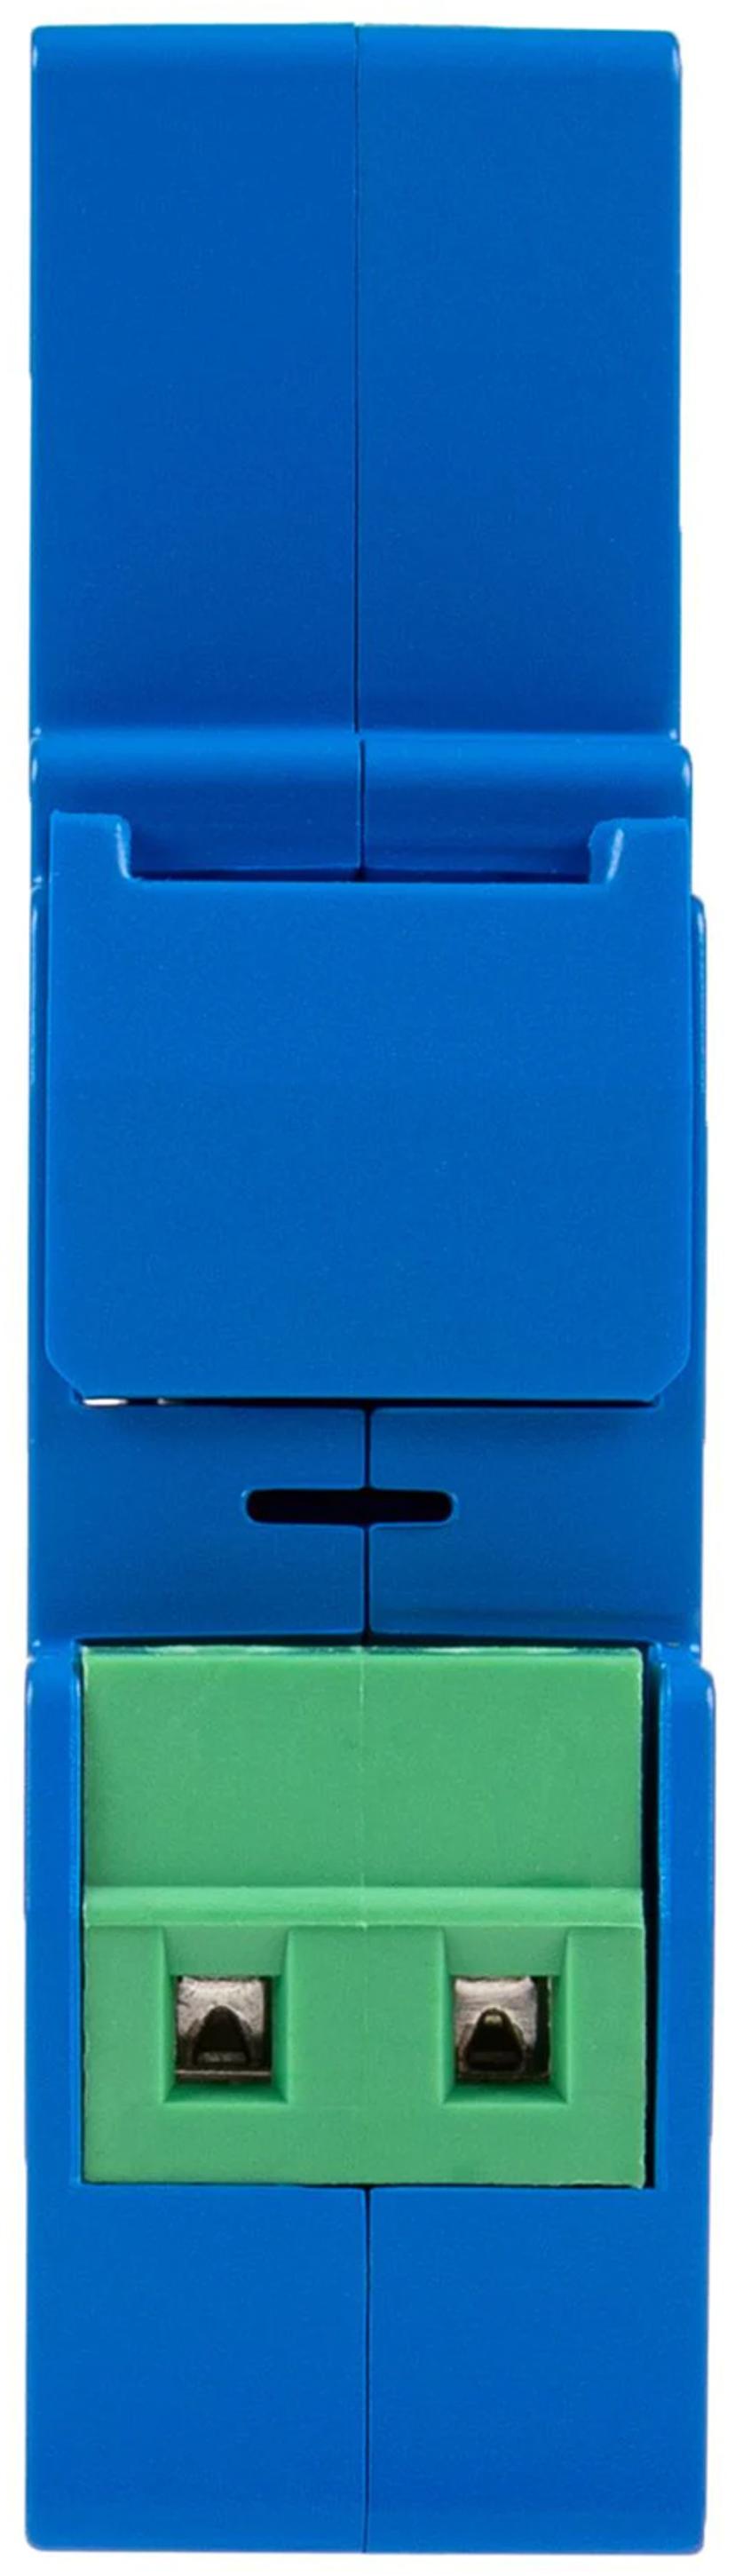 Shelly Pro 1 Din Wifi 1-Ch 16A Blue 5-Pack